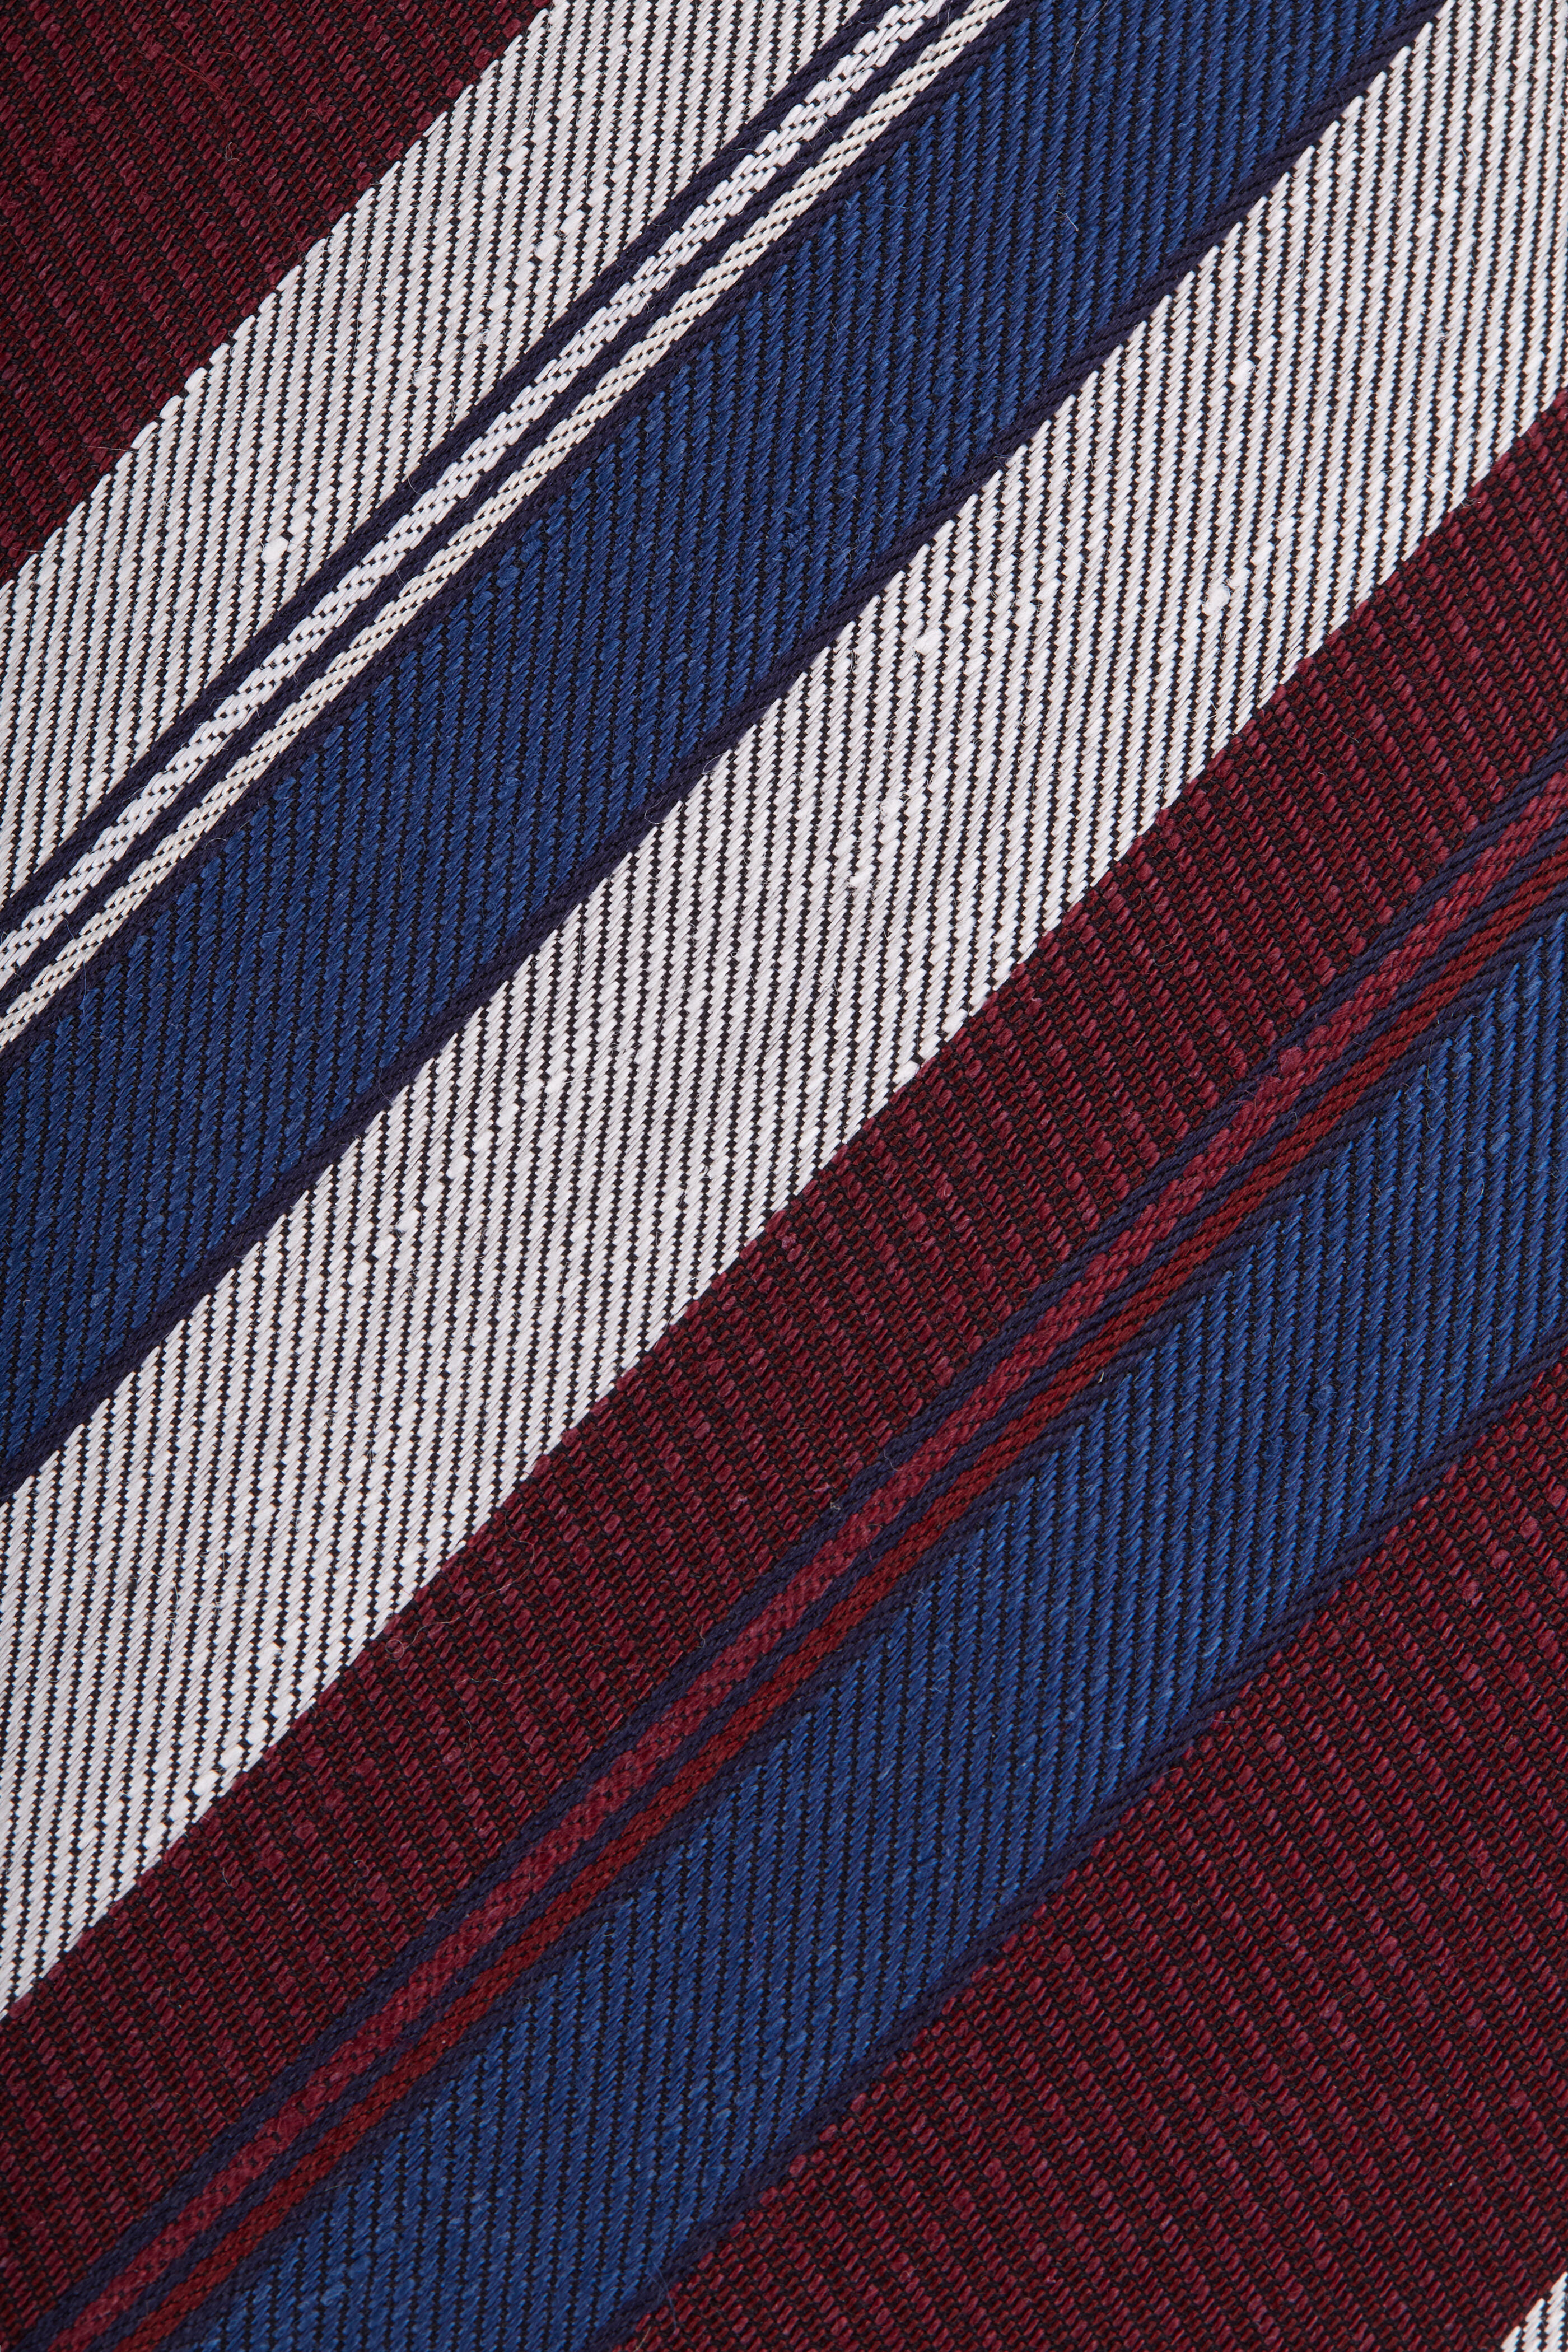 Kiton - Navy, Red & Silver Striped Silk Jacquard Necktie